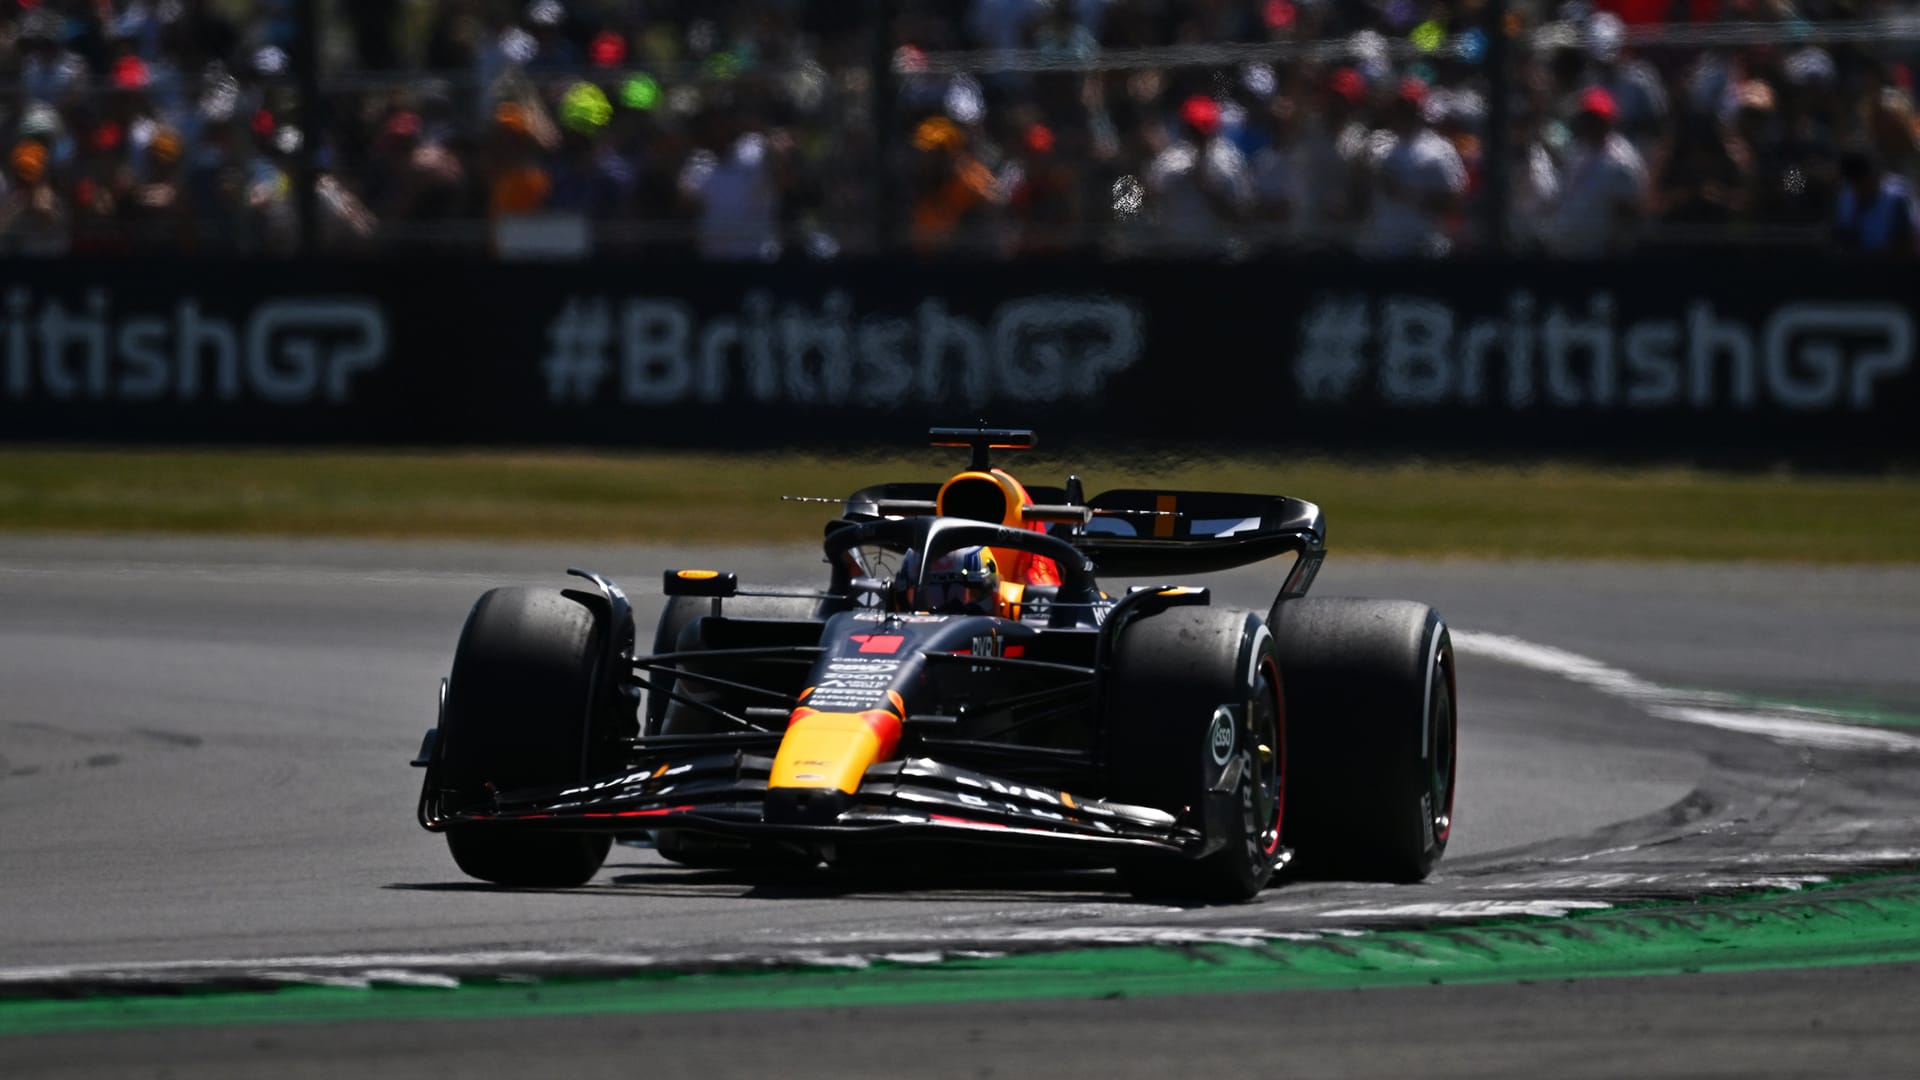 2023 British Grand Prix race report and highlights: Verstappen